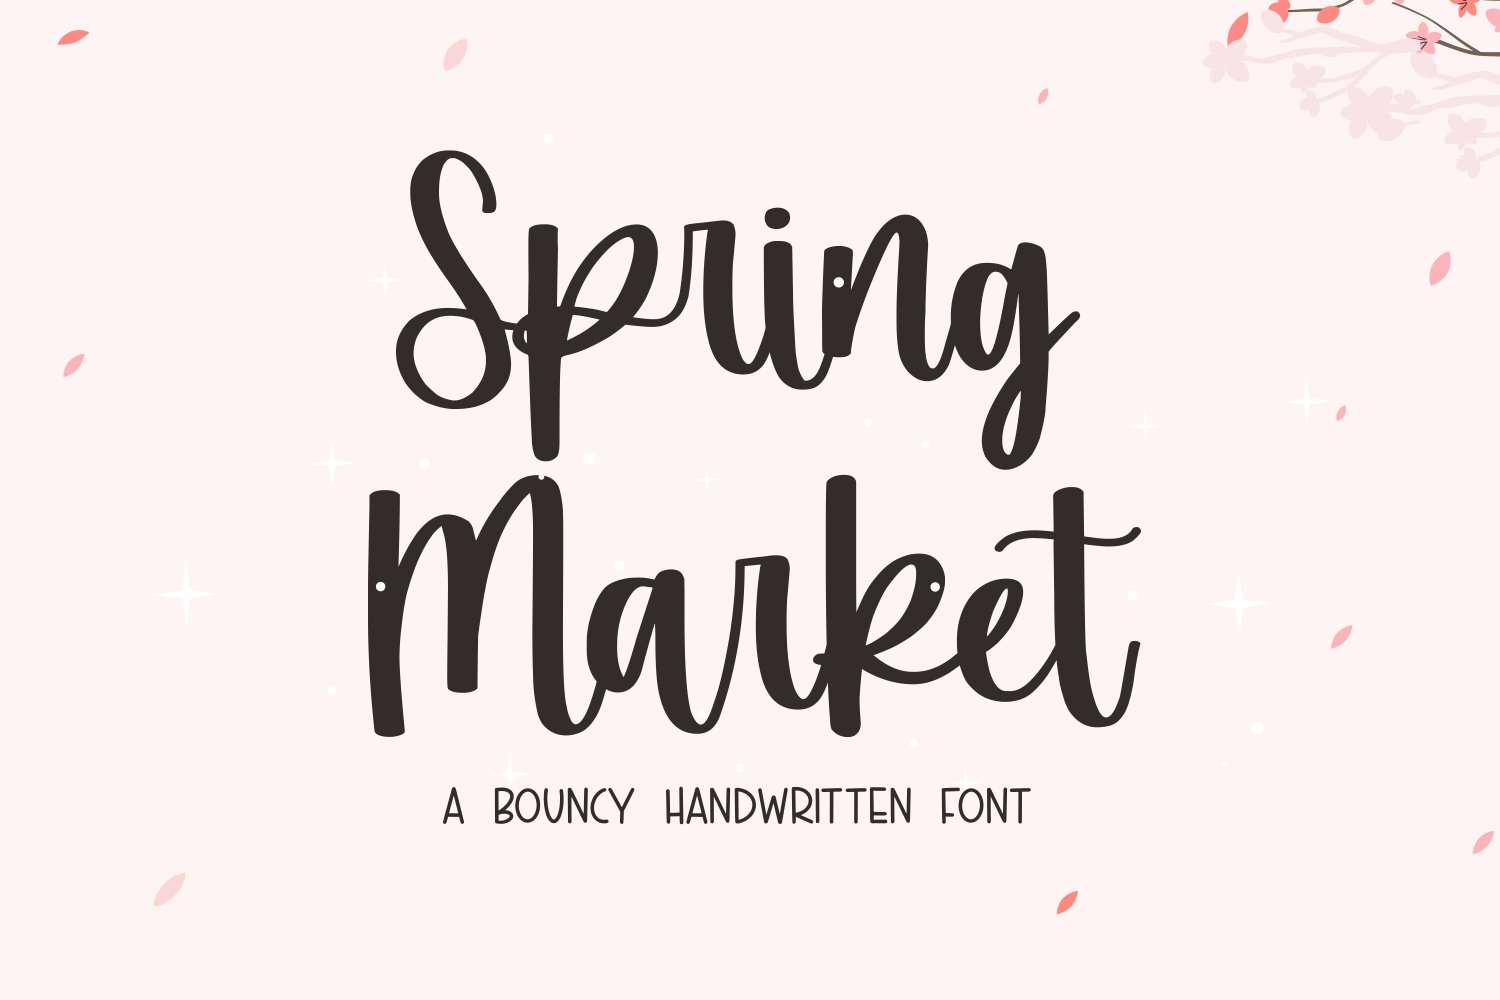 Spring Market cover image.